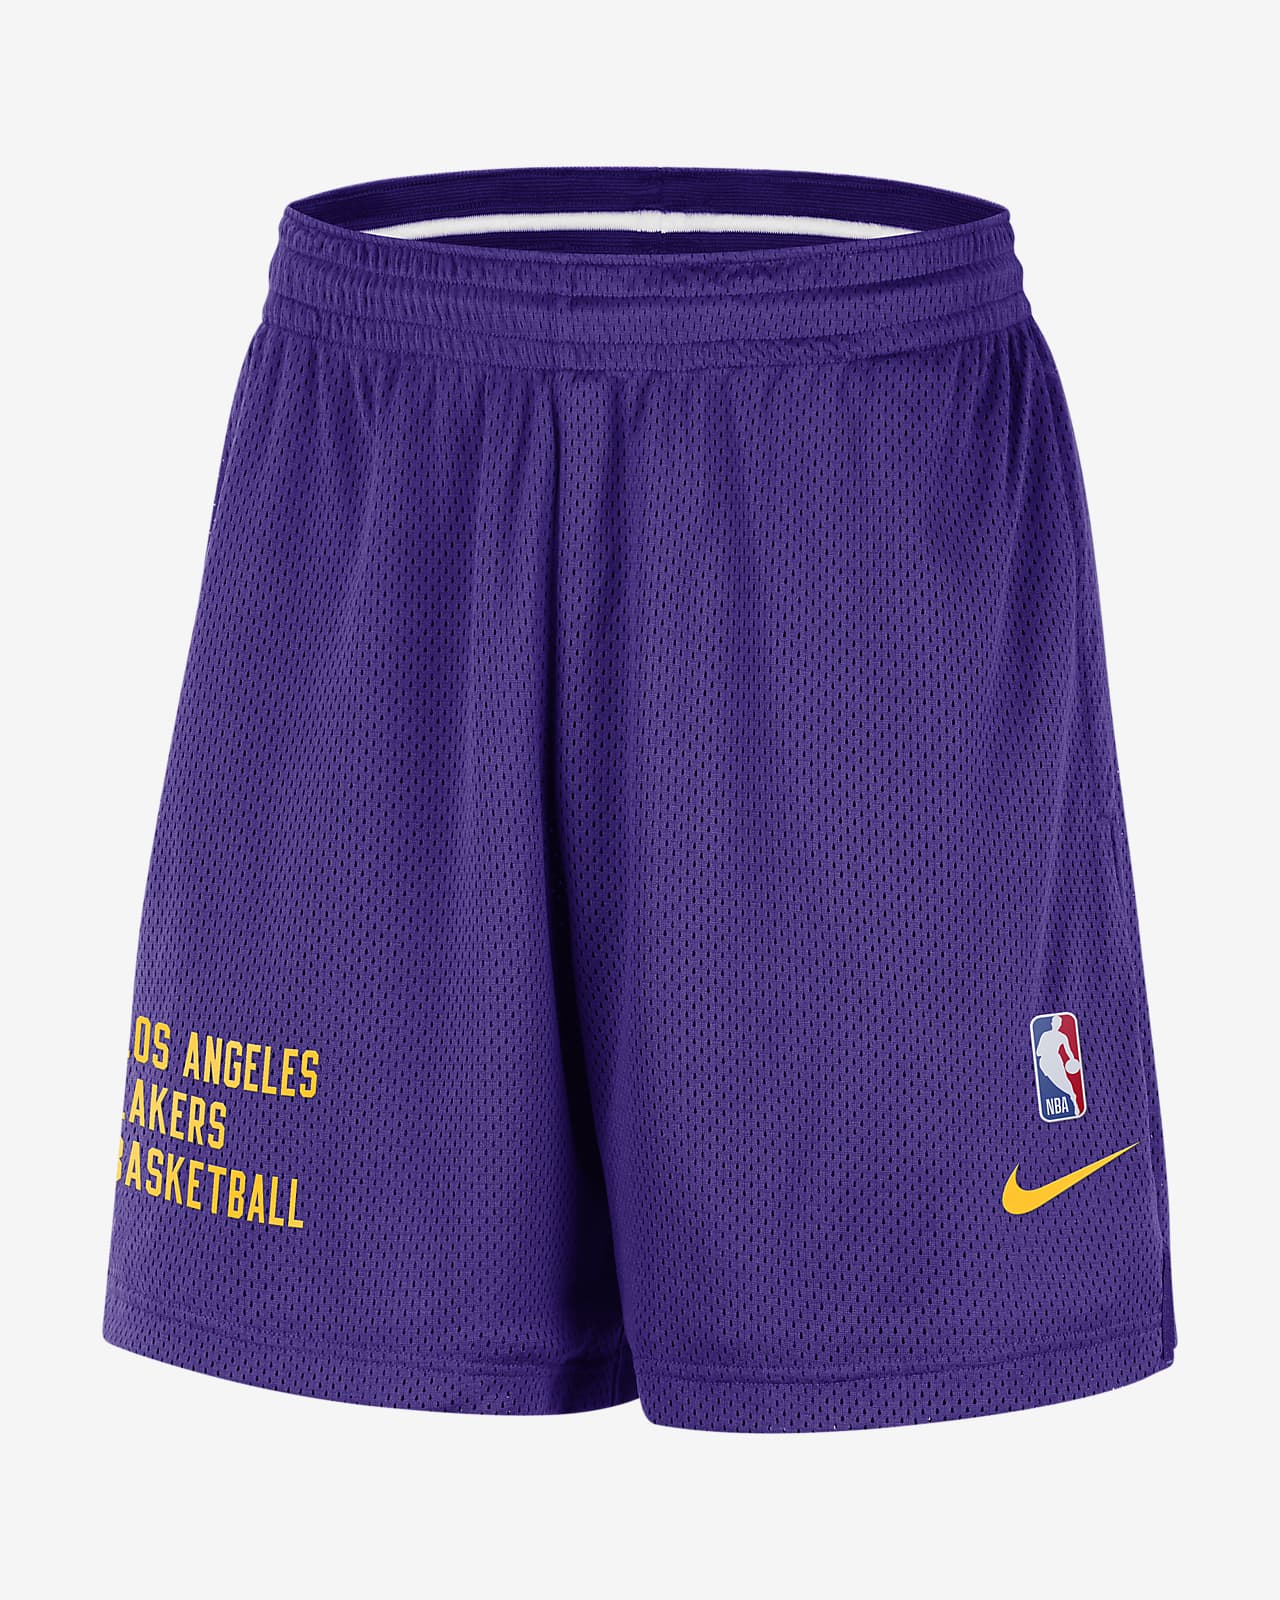 Los Angeles Lakers Nike NBA-shortsene i mesh til mænd